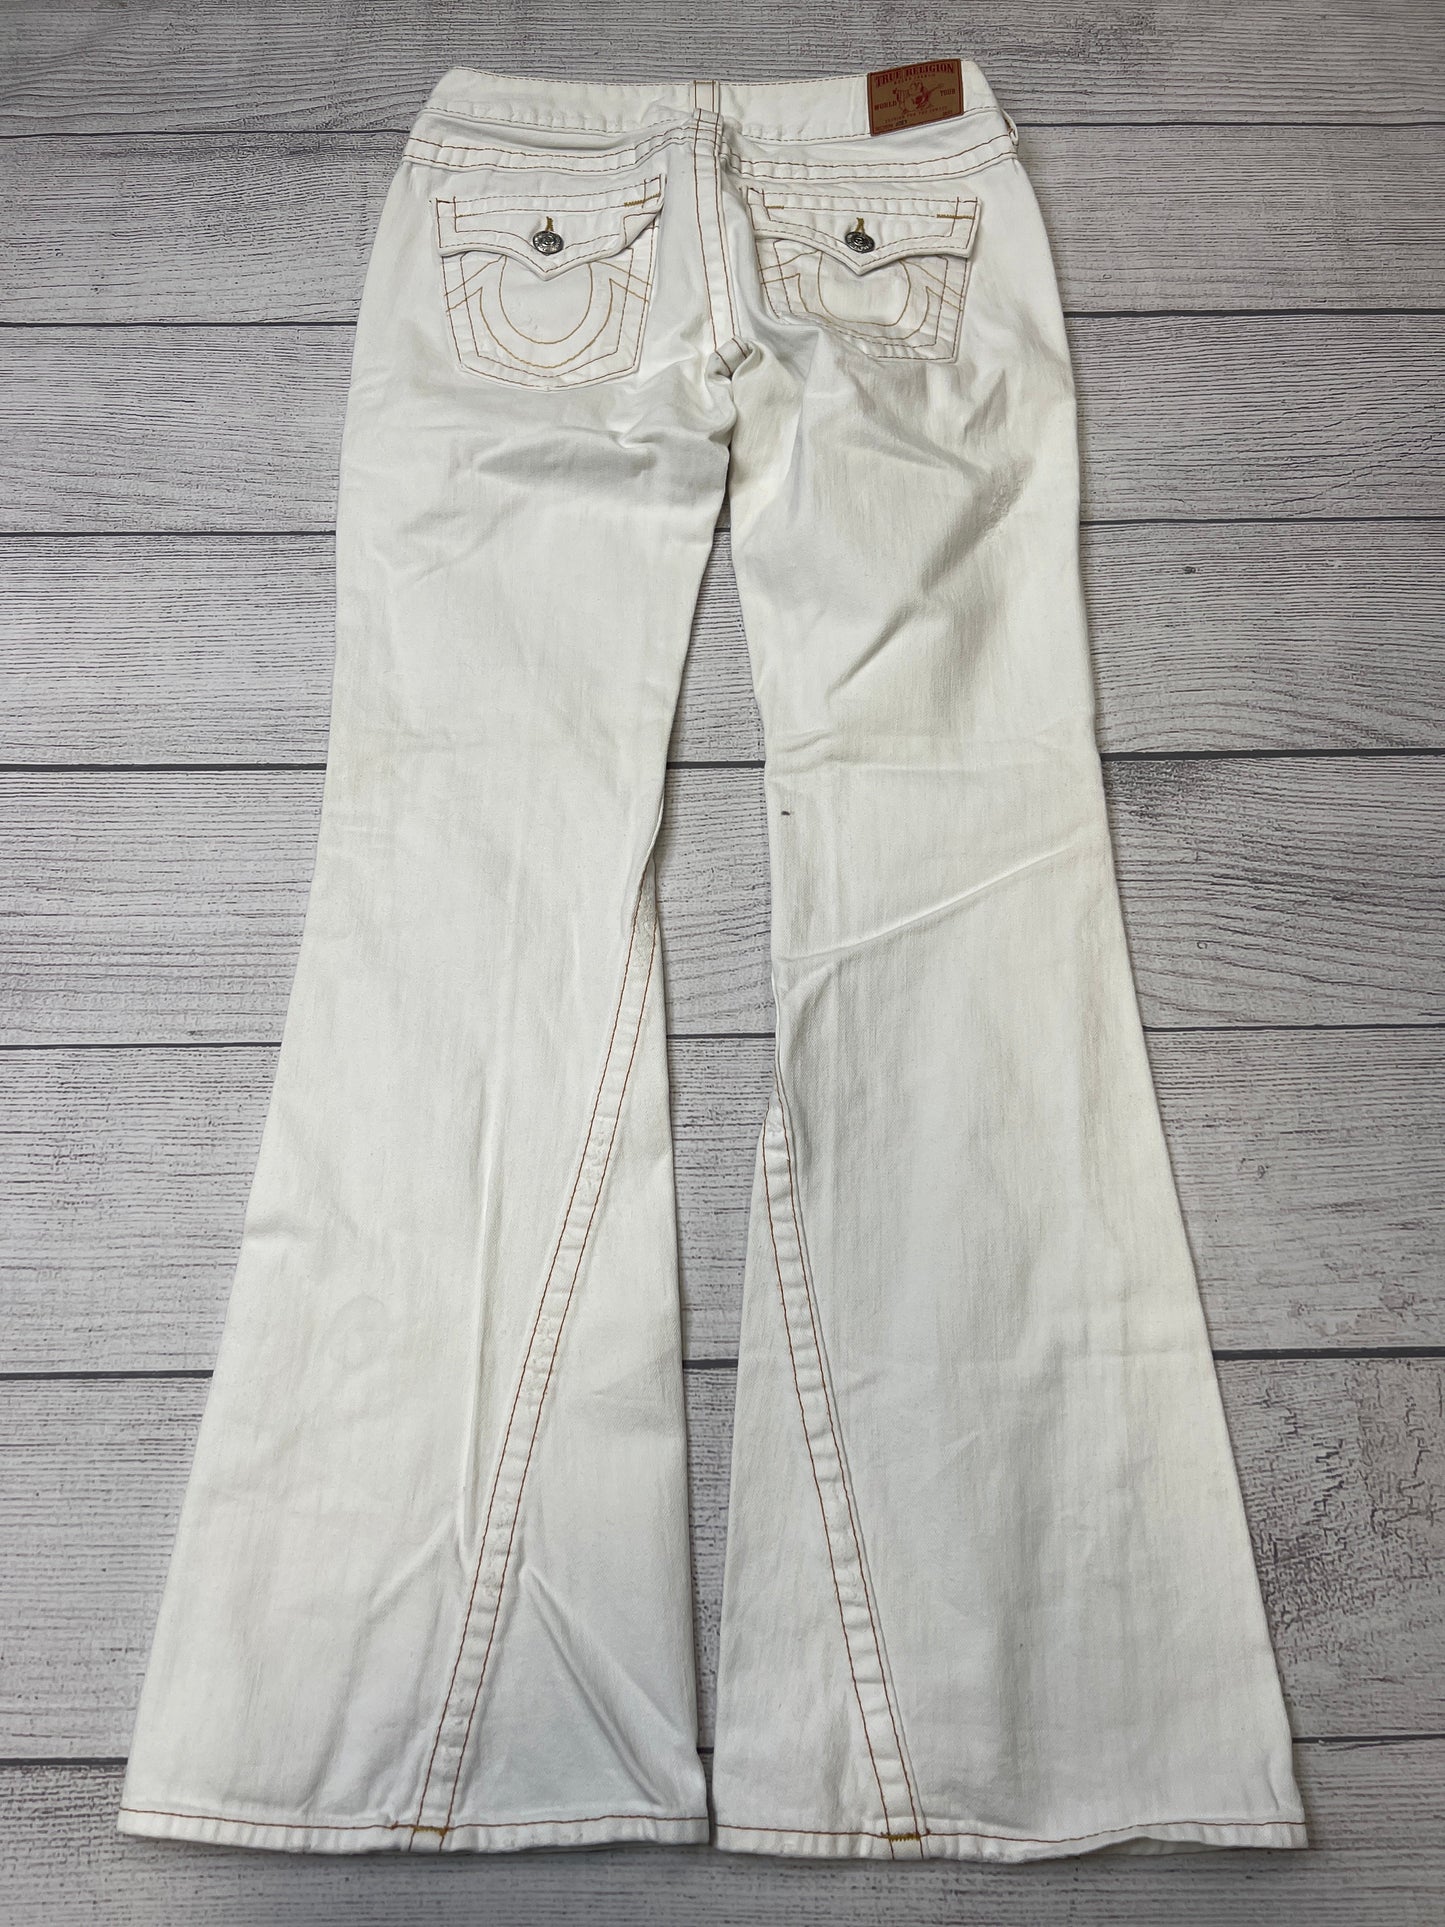 Jeans Designer By True Religion  Size: 8